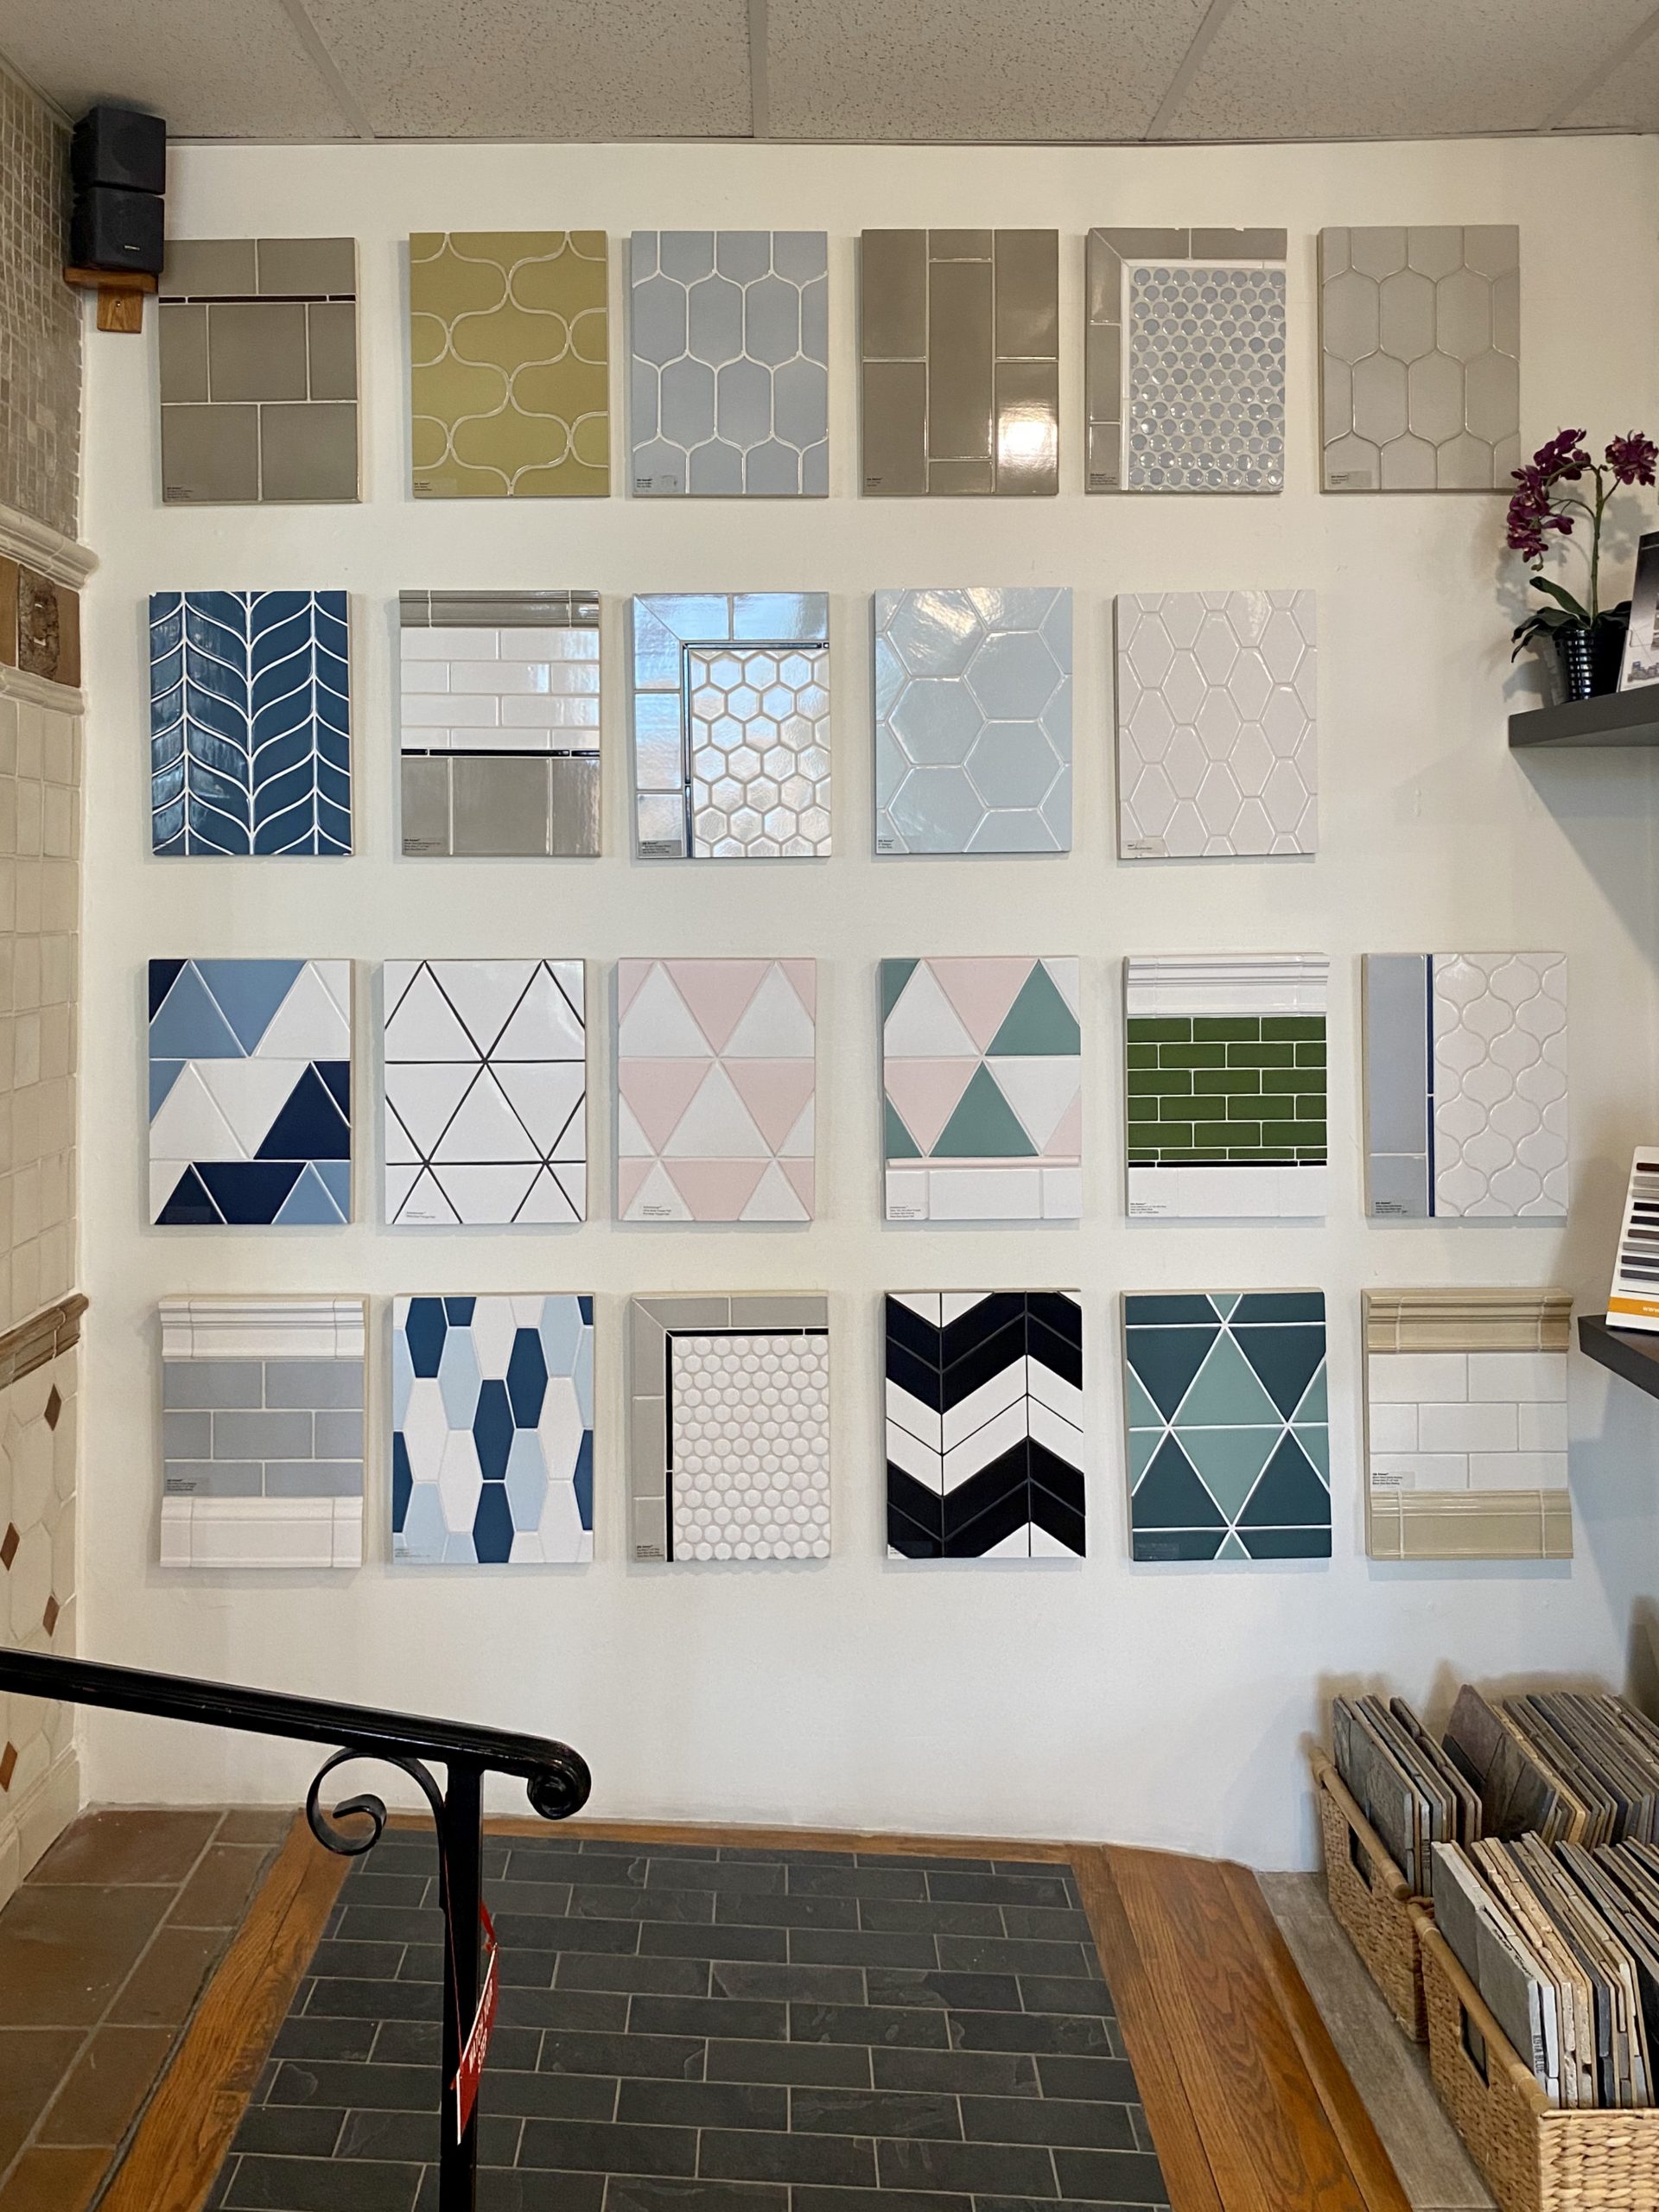 Garden State Tile │ Savannah, GA Tile & Stone Showroom